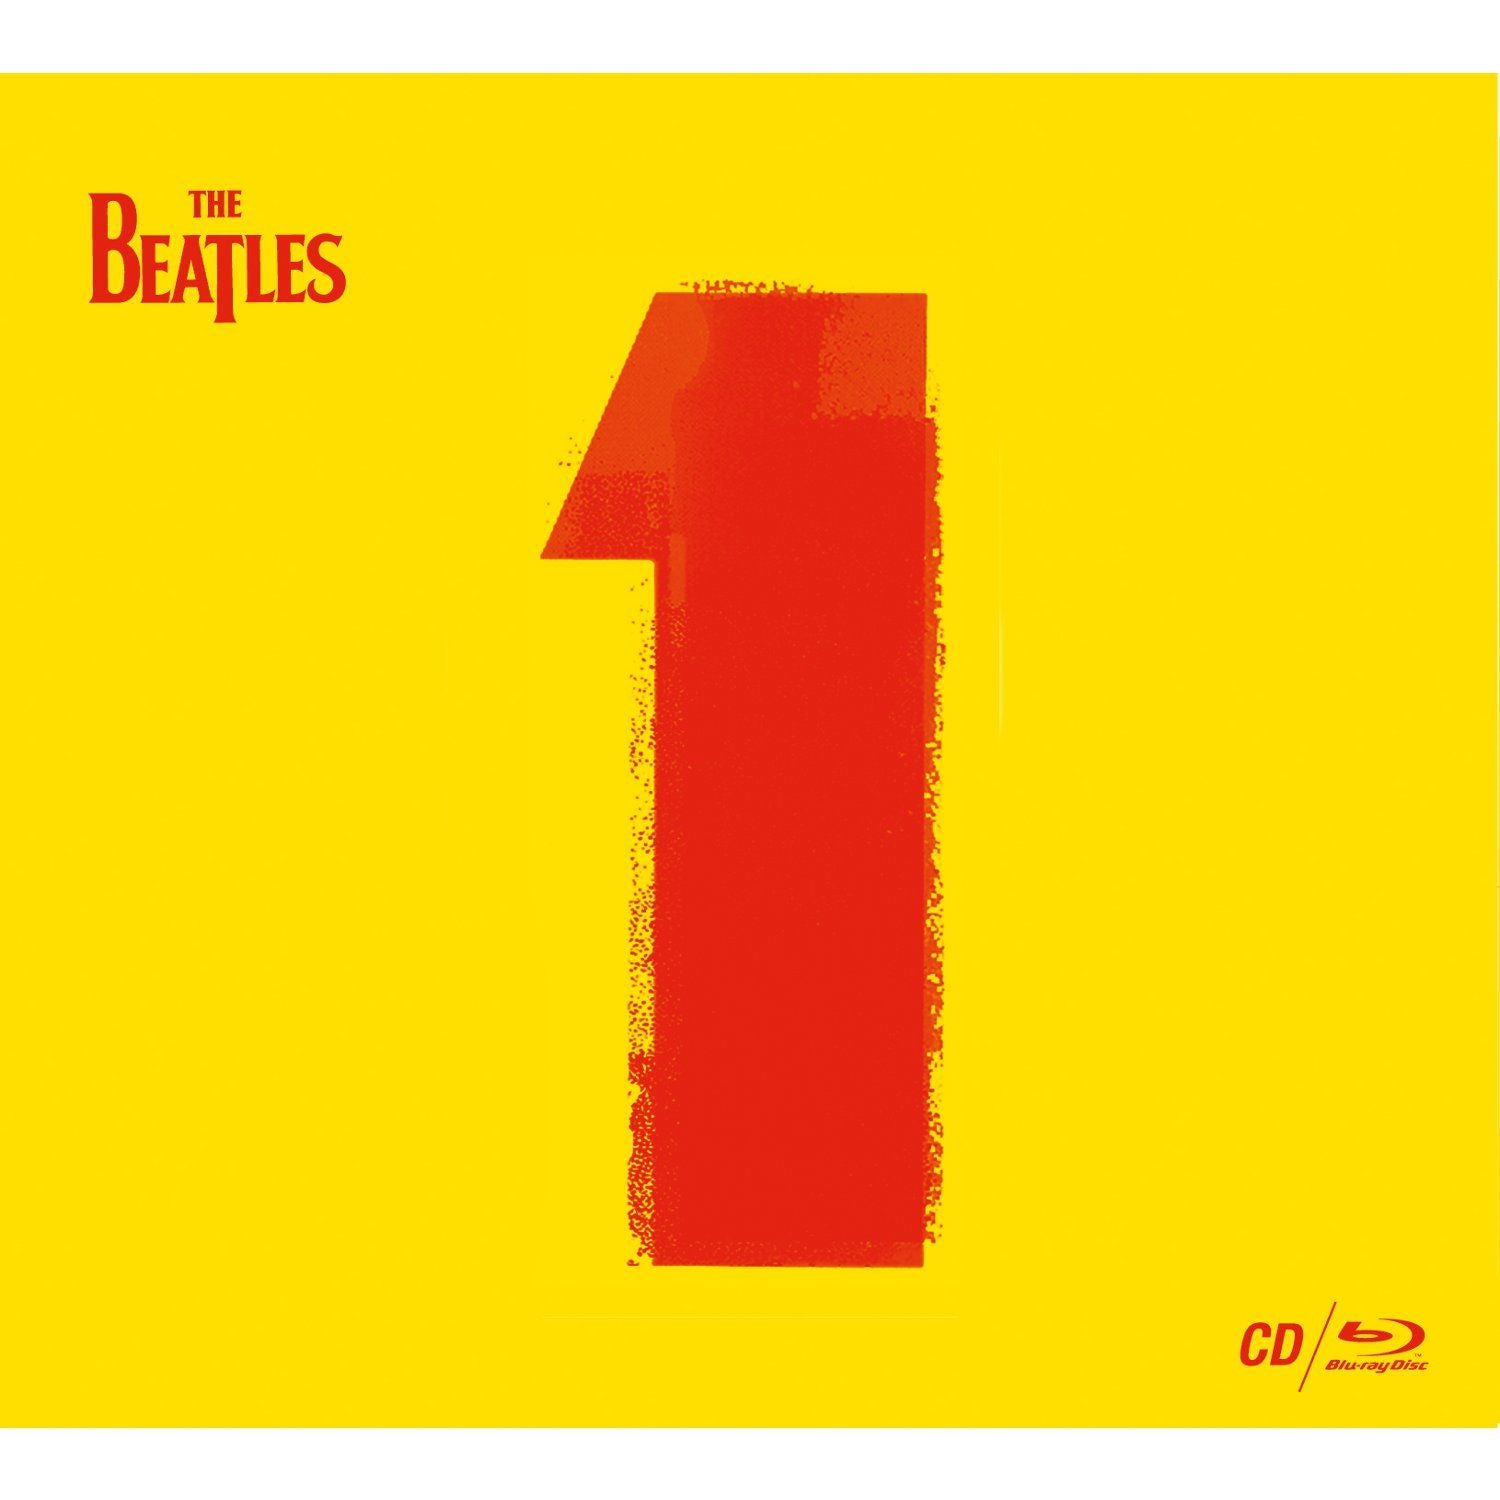 The Beatles - 1 (2015 CD & Blu-ray)